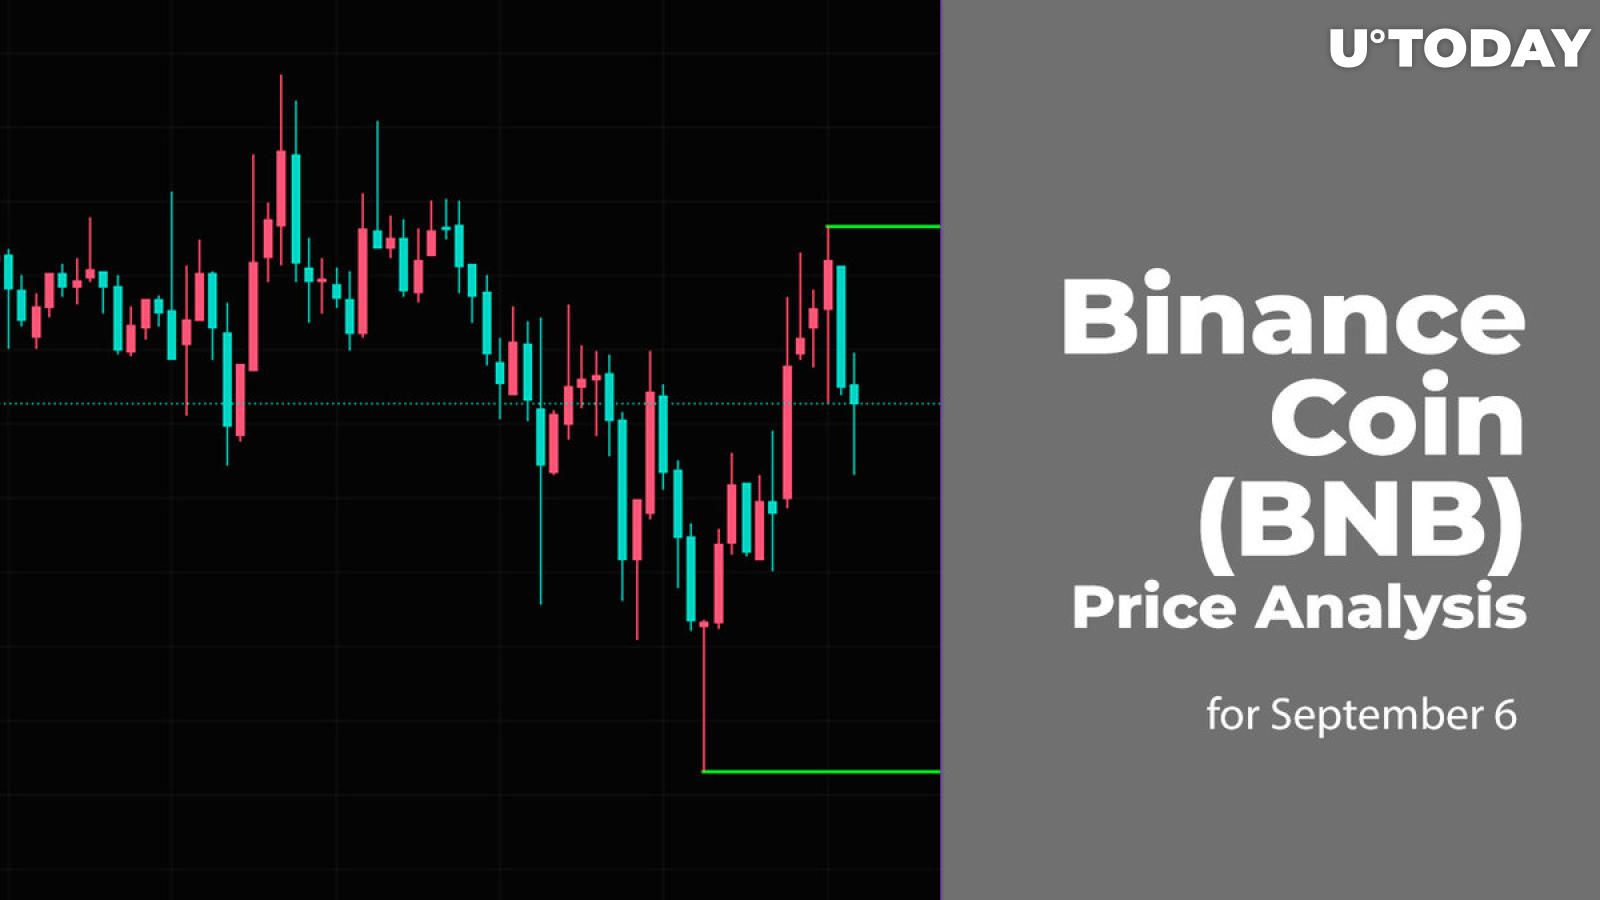 Binance Coin (BNB) Price Analysis for September 6